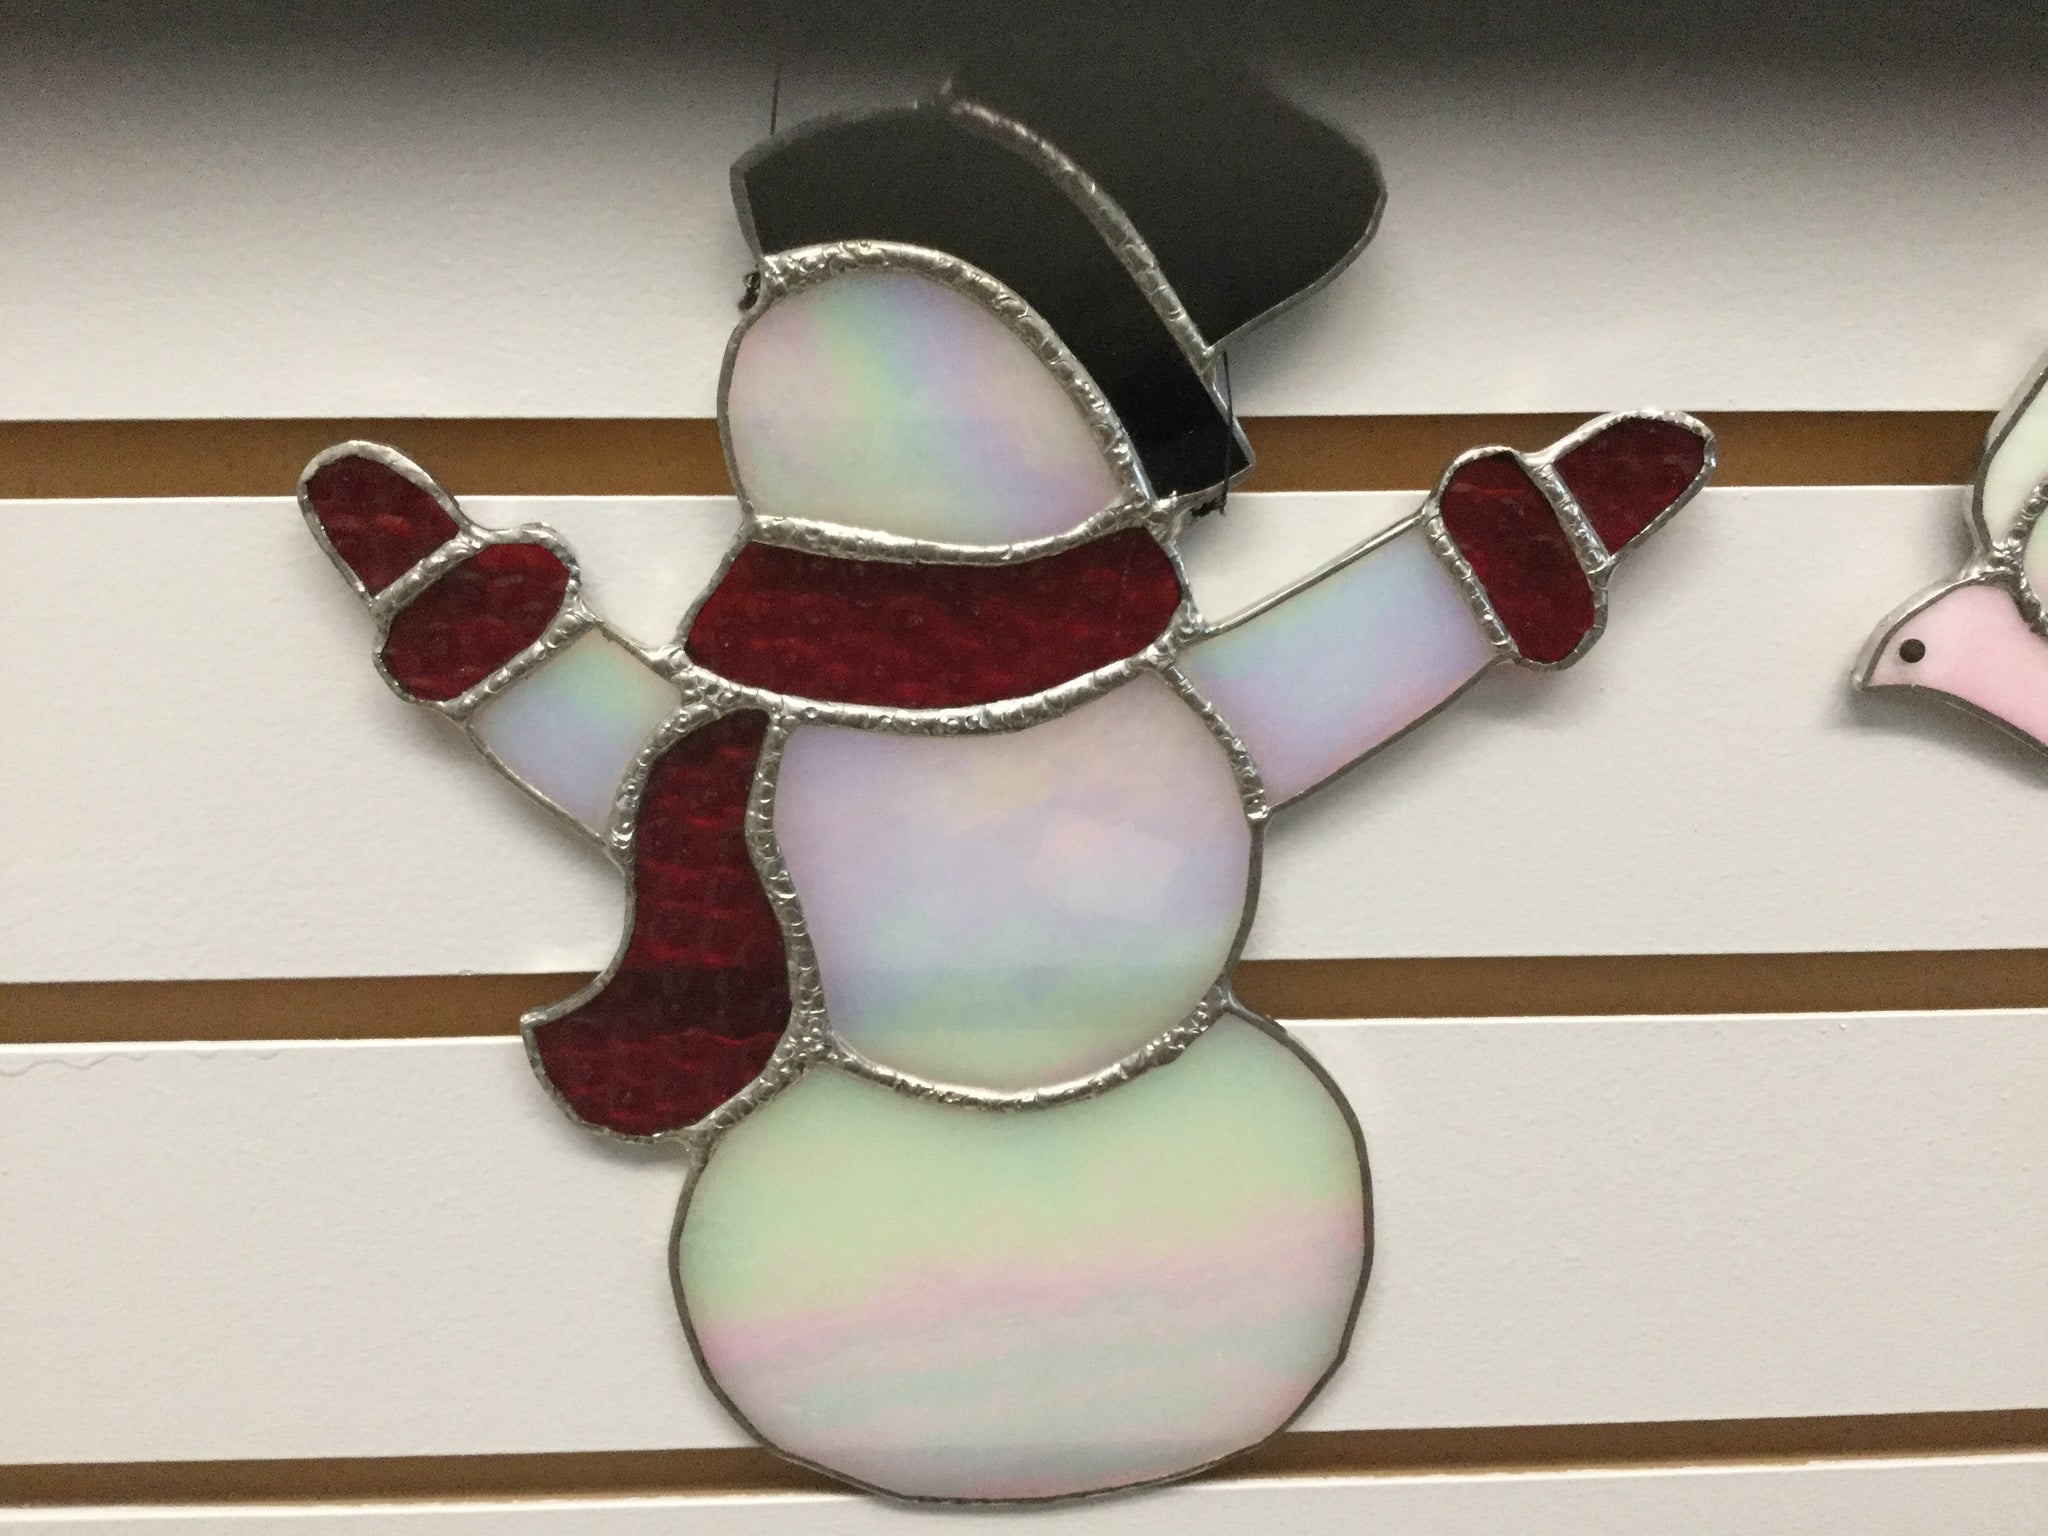 Snowman stain glass by Cheryl Olafson